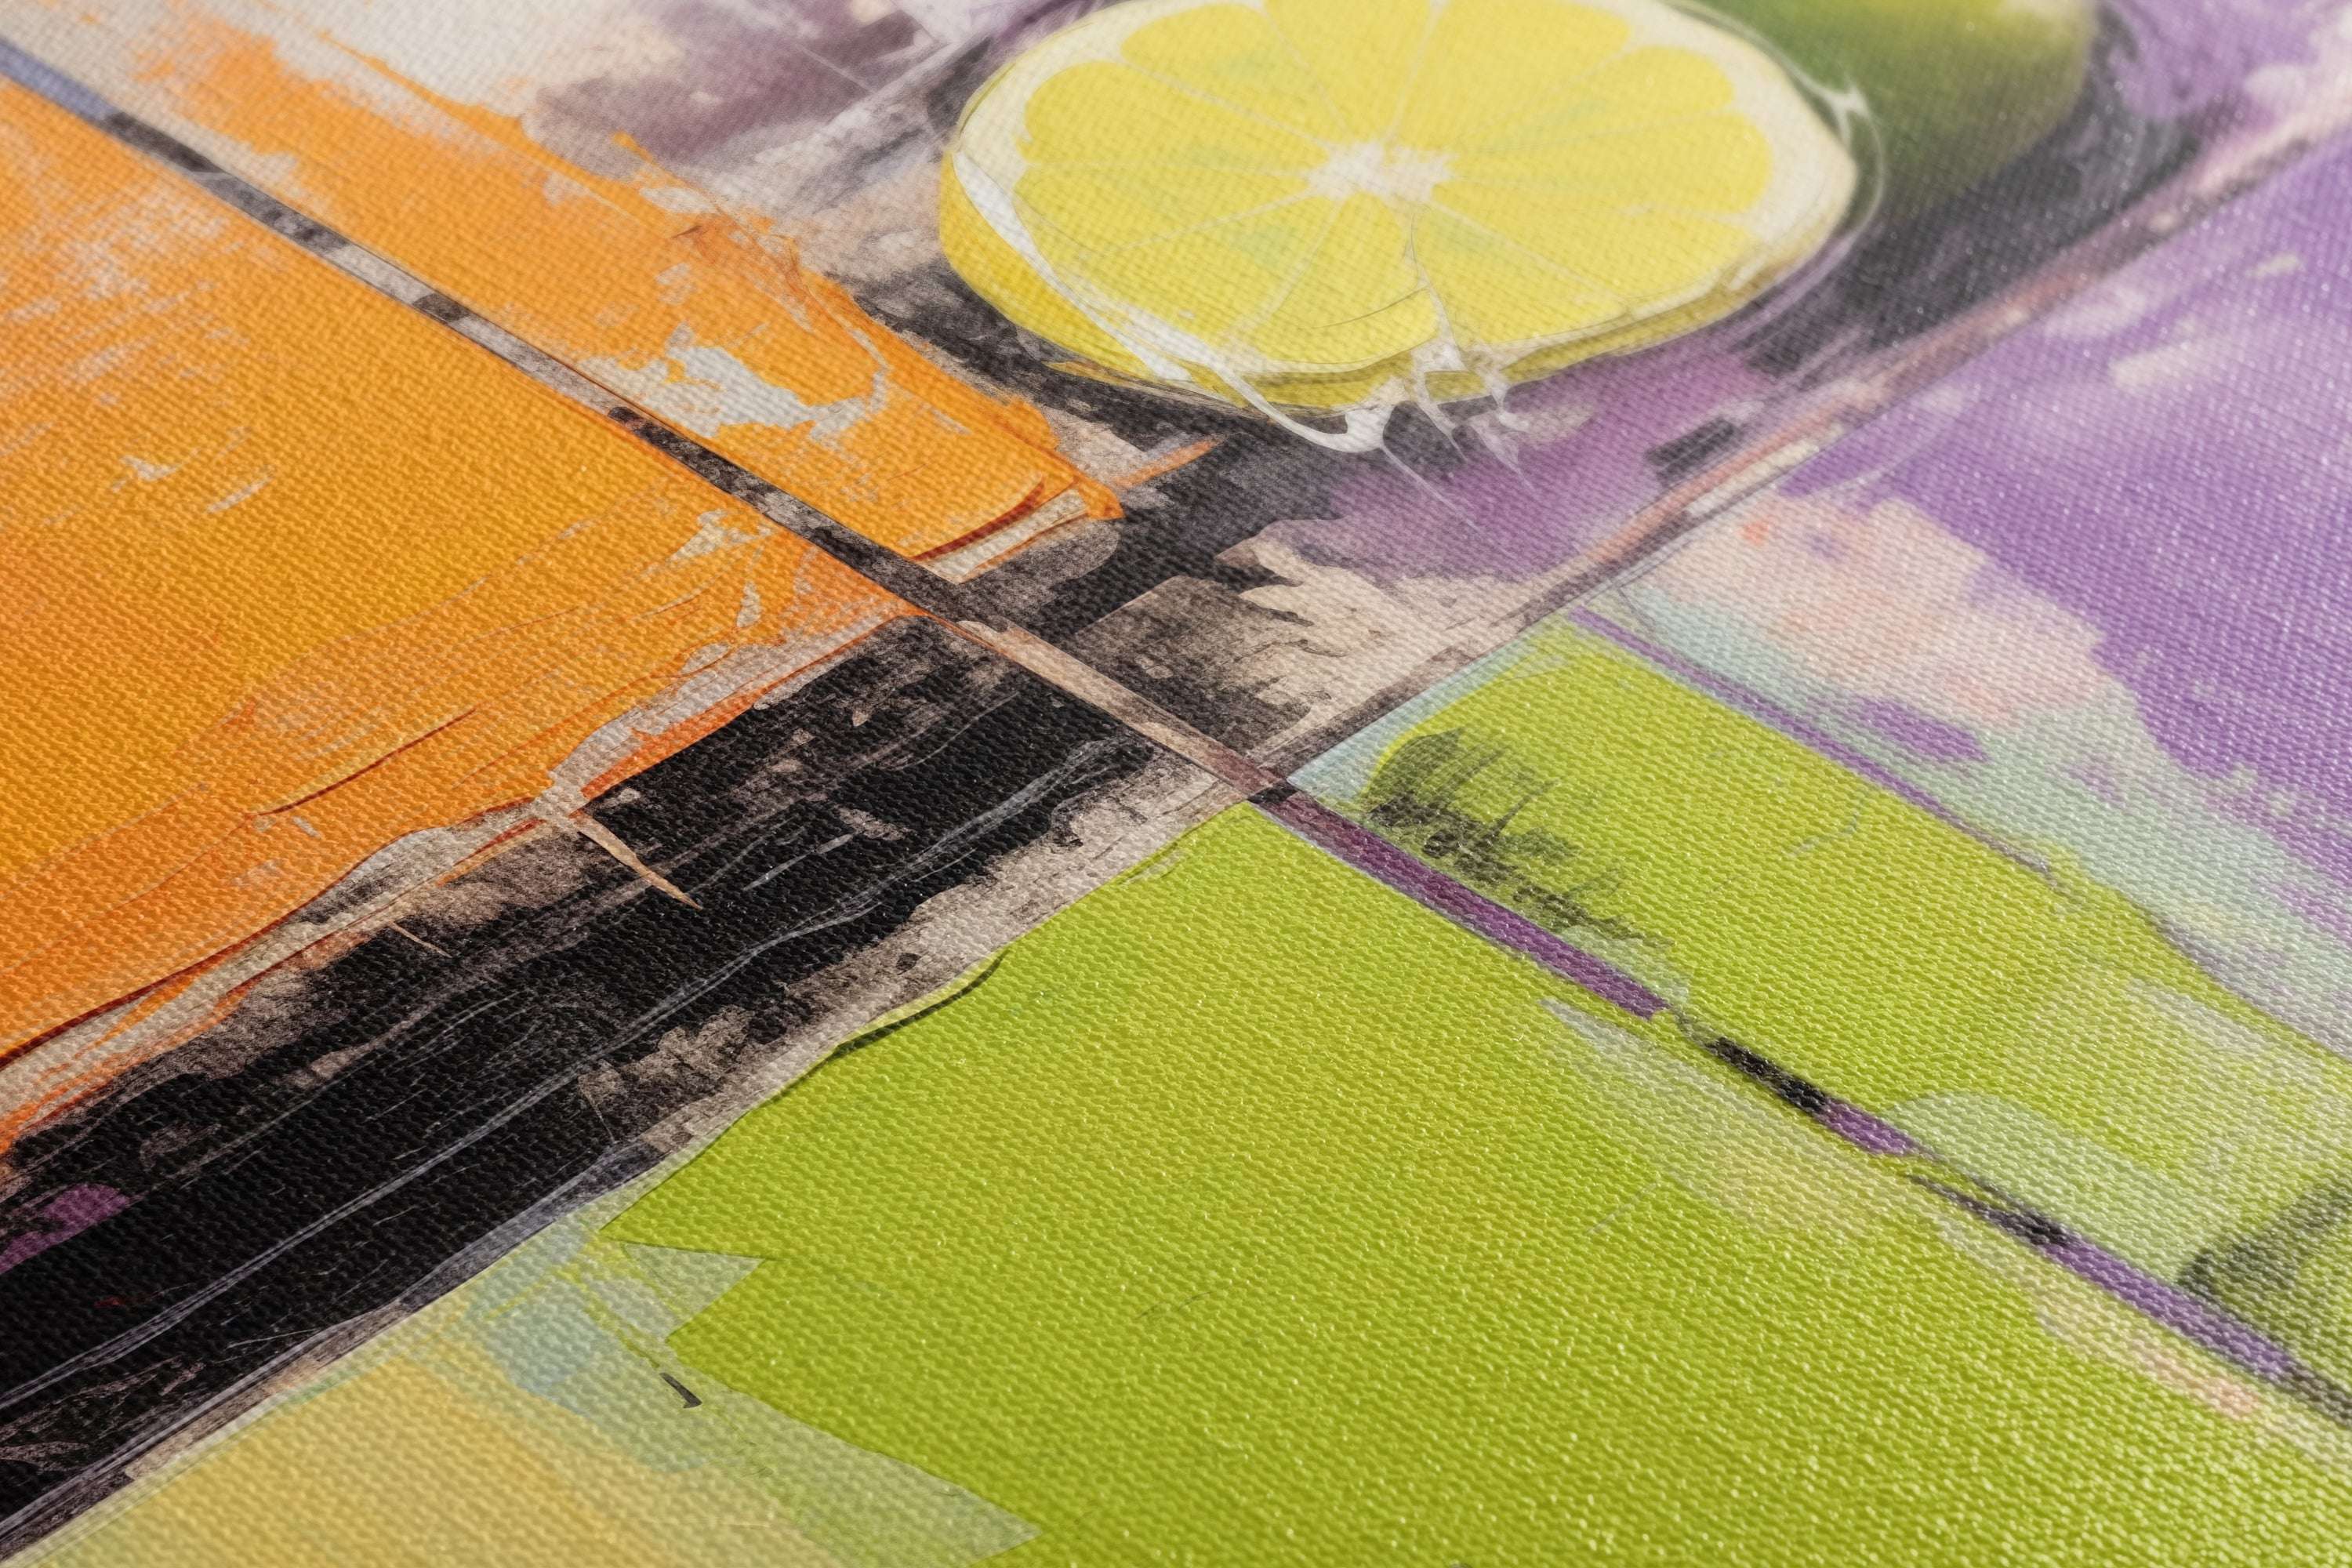 Vivid Lemon Slice in Abstract - Canvas Print - Artoholica Ready to Hang Canvas Print